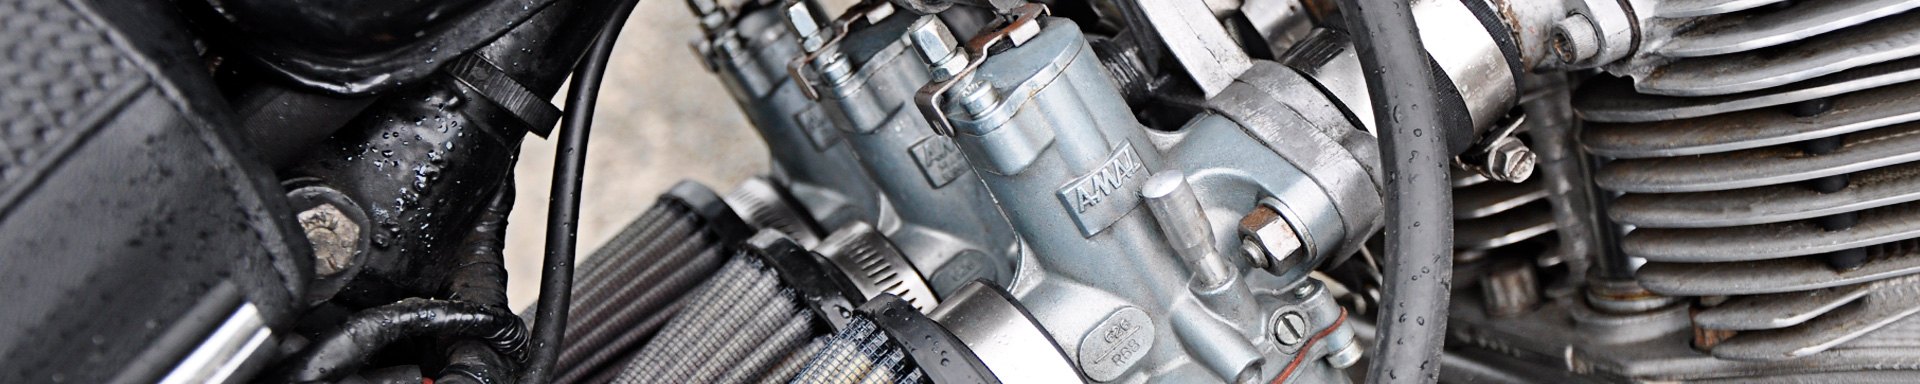 Kawasaki Ninja ZX-6R Fuel Parts | Carburetors & Tanks 